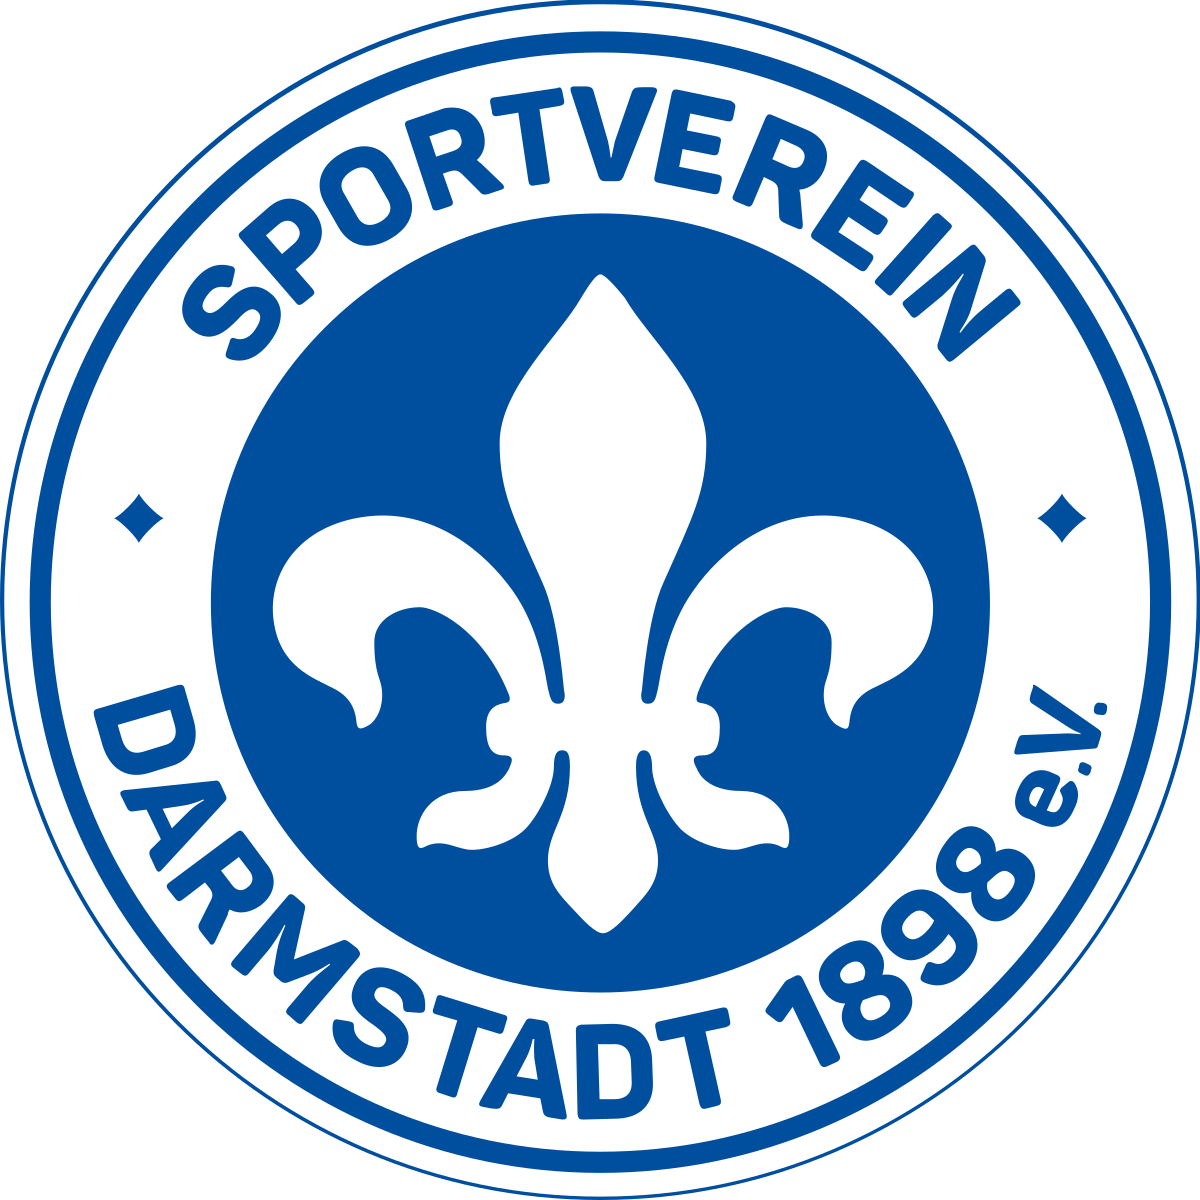 FC Koln Vs SV Darmstadt Live Stream 2024: Week 30